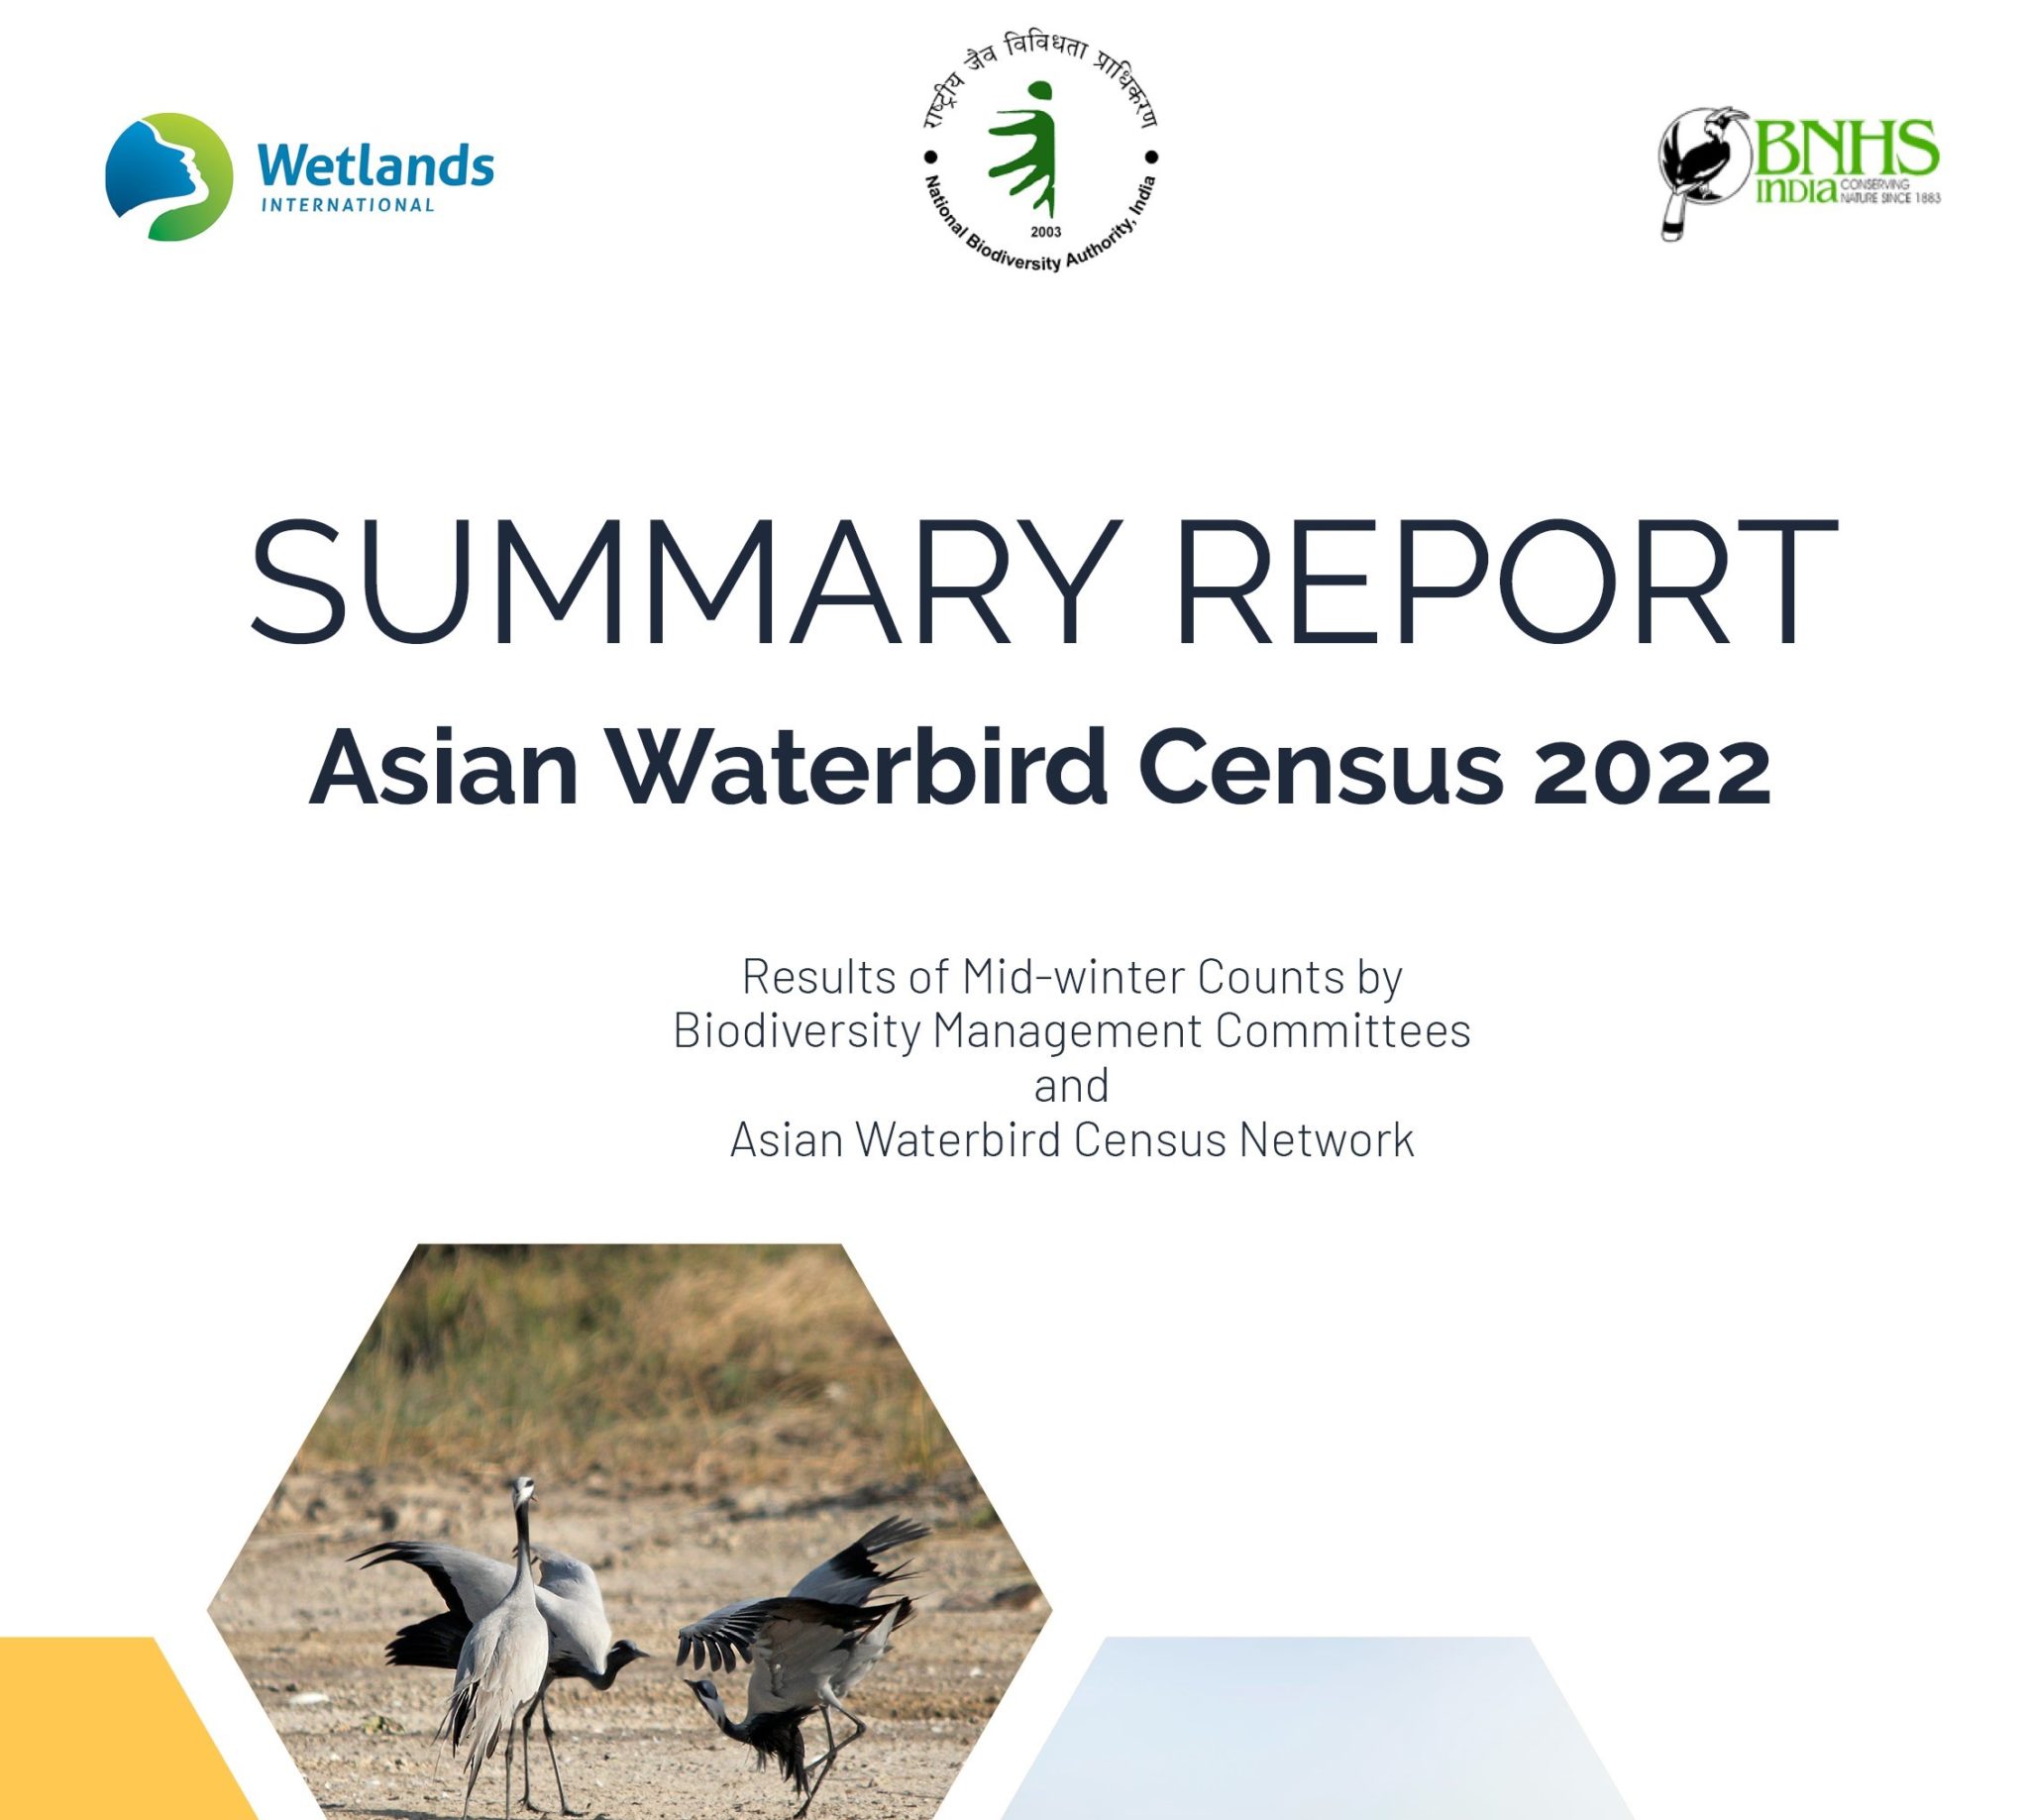 Summary Report on Asian Waterbird Census 2022 released marking World